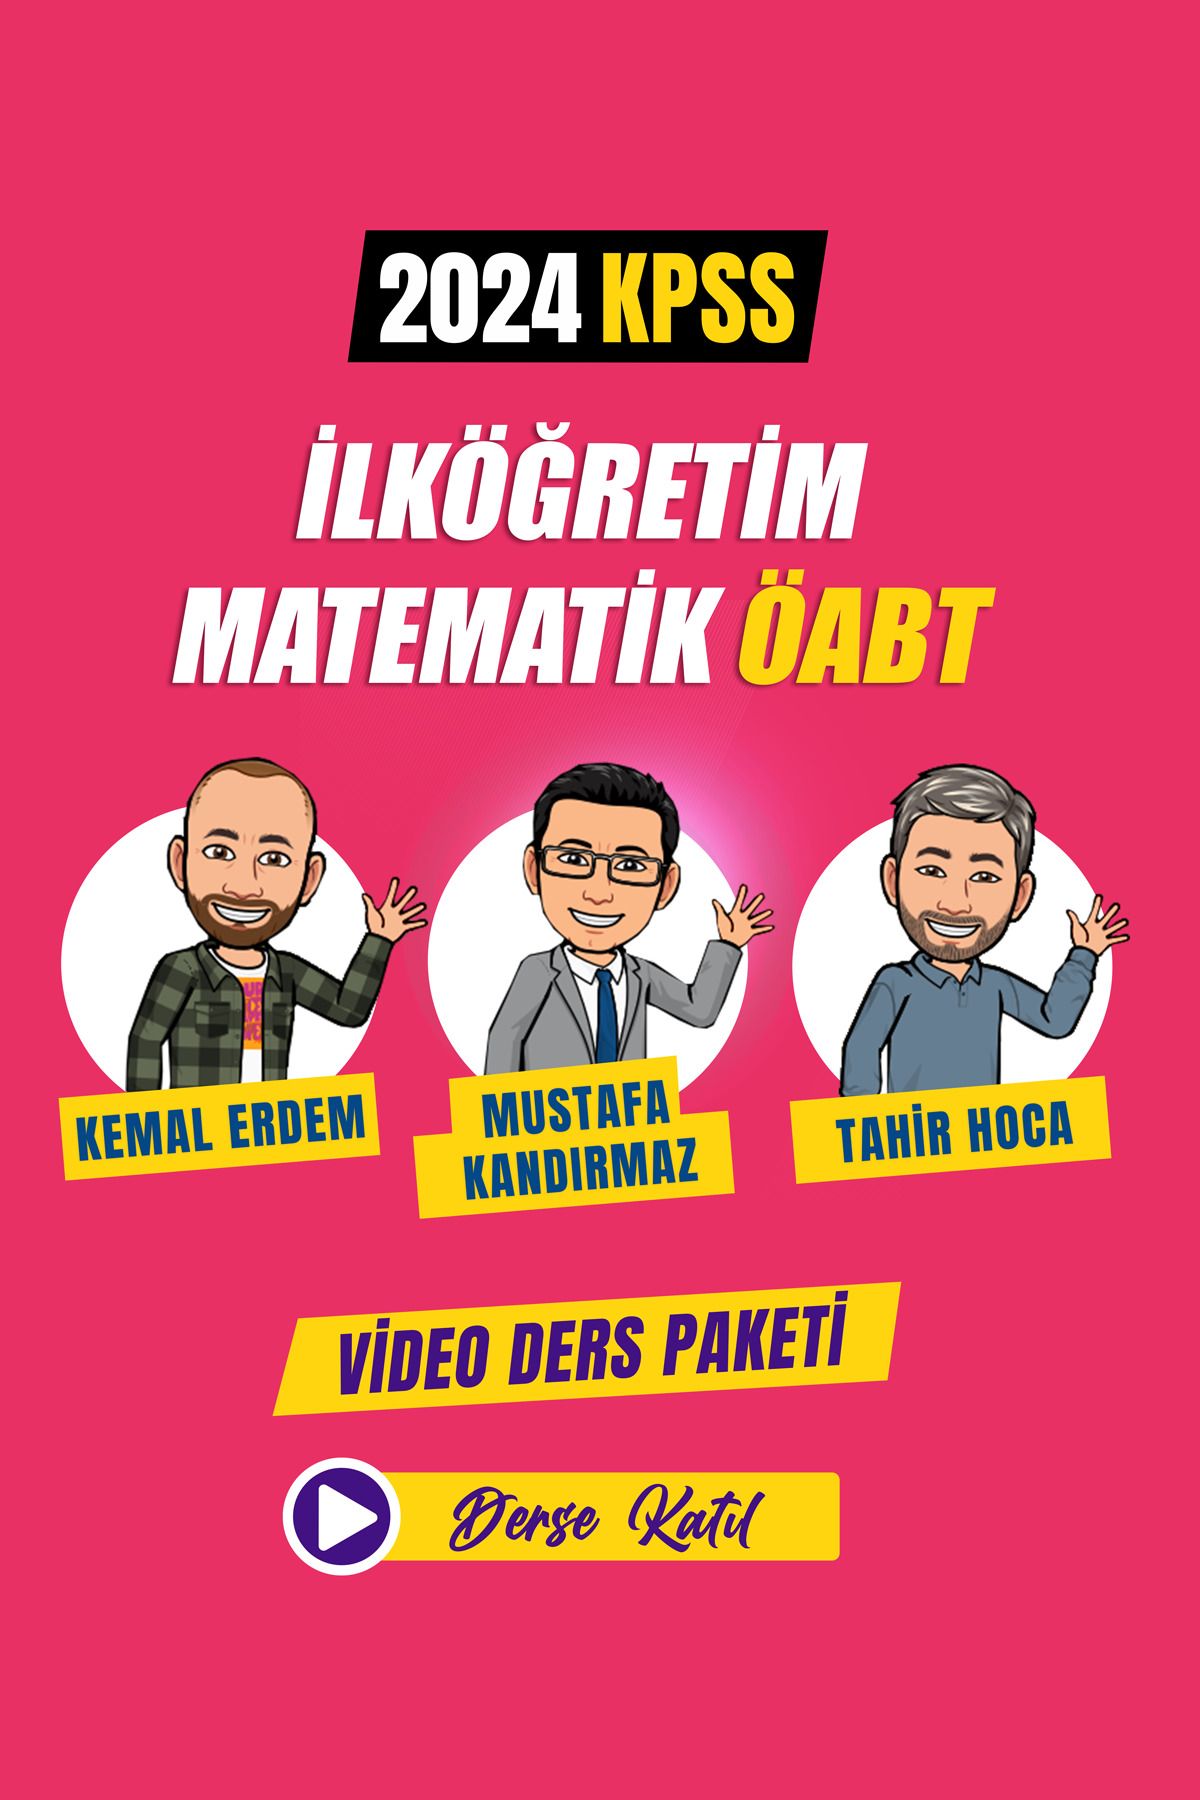 dijital hoca akademi 2024 Ilköğretim Matematik Öabt Video Ders Paketi Dijital Hoca Akademi